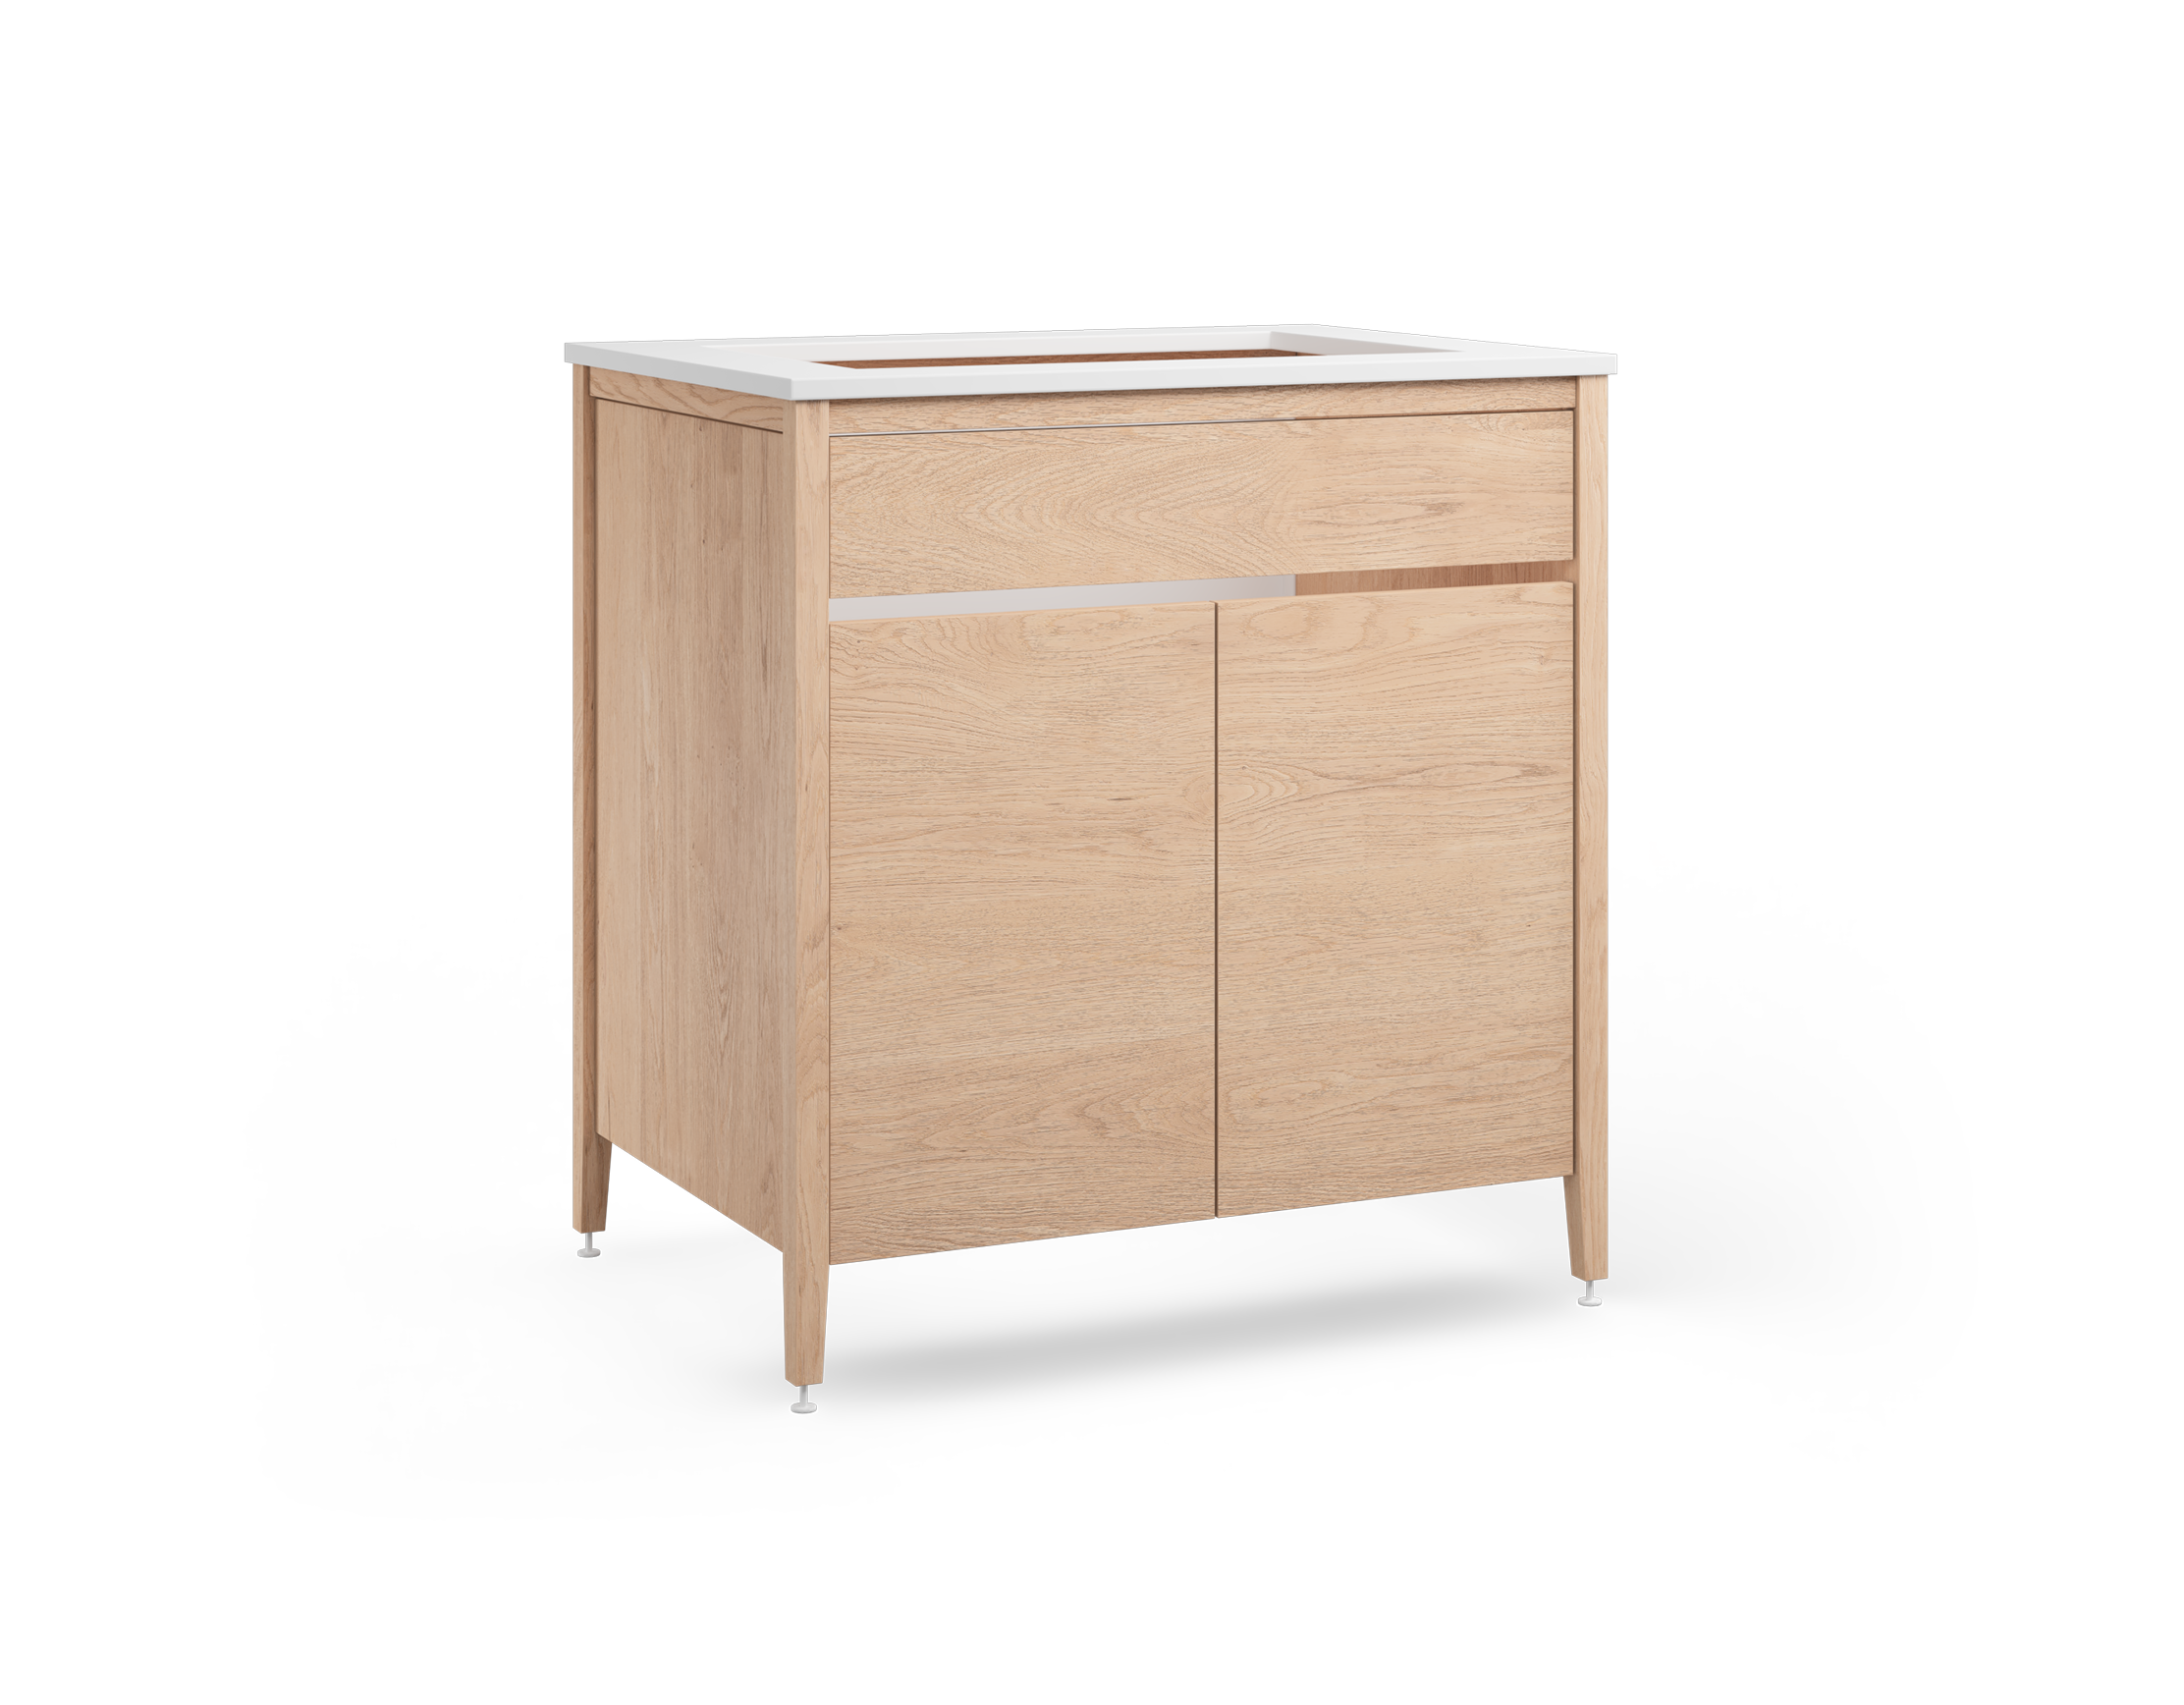 All wood Radix cabinet